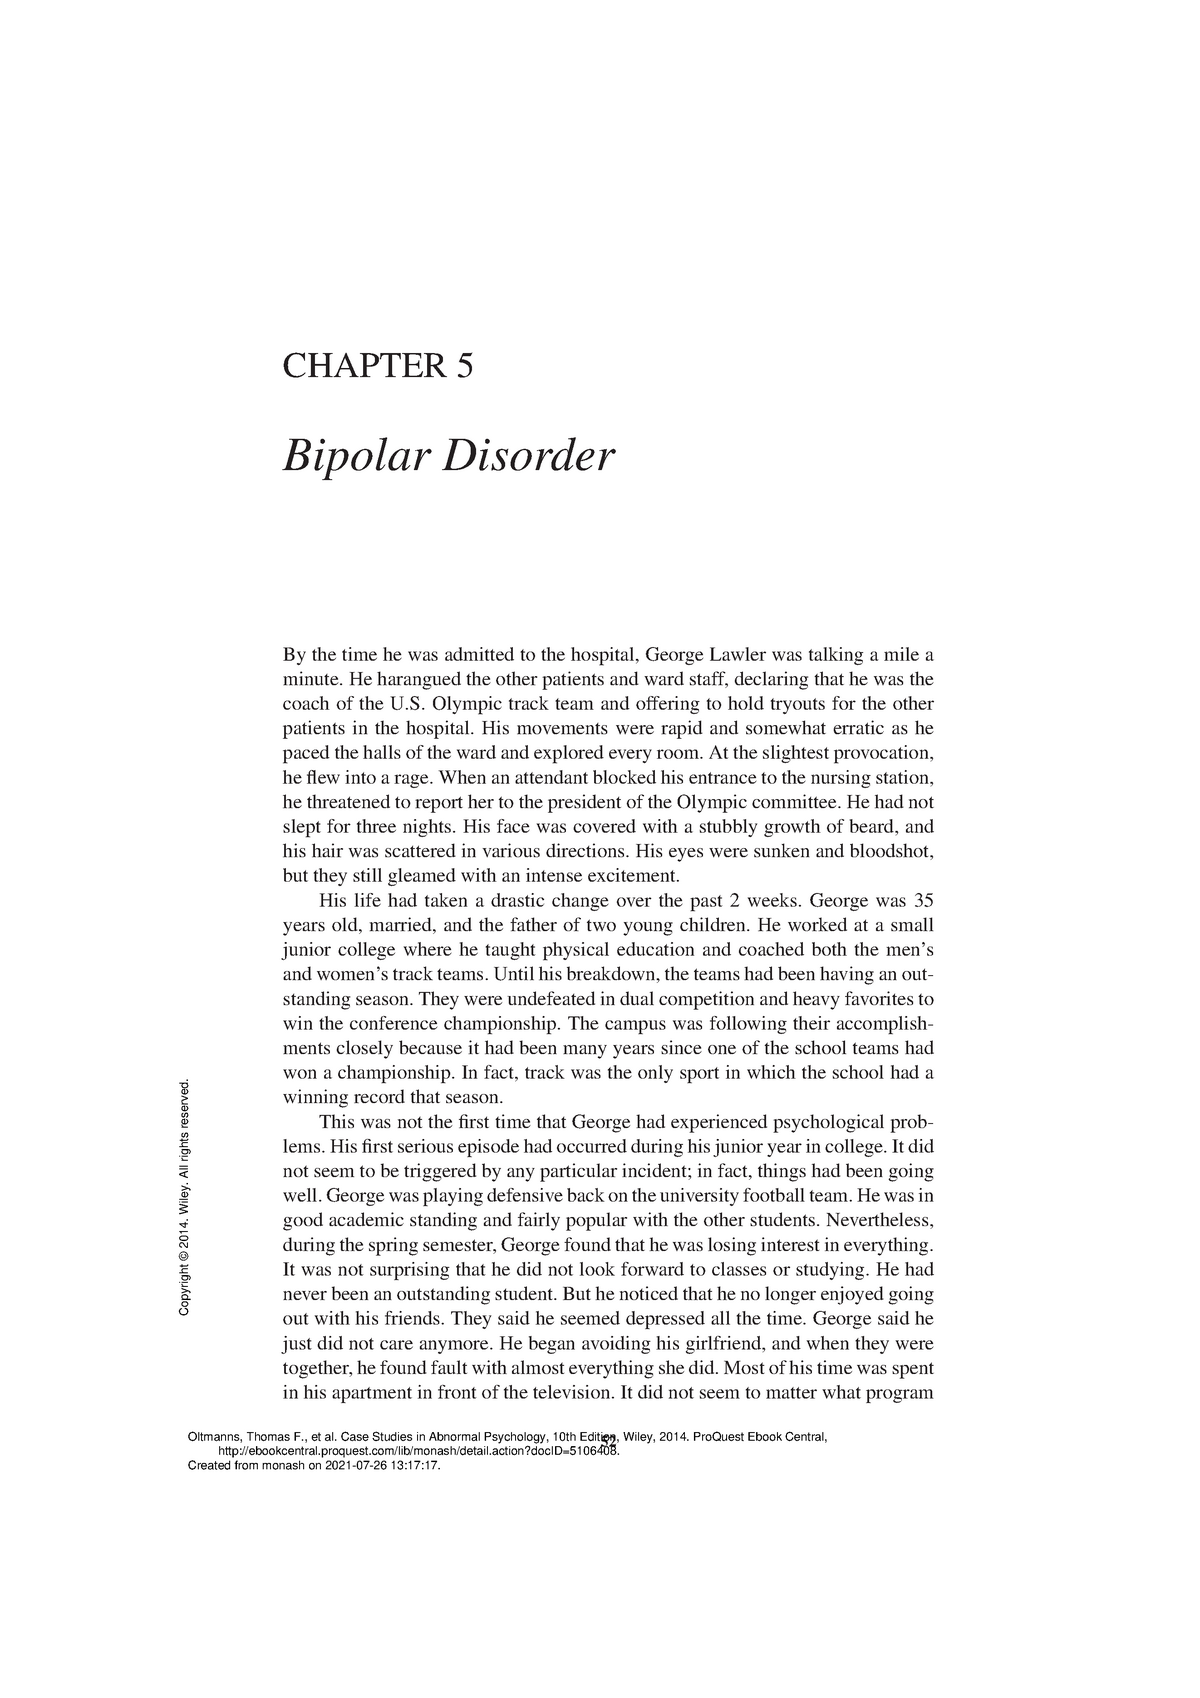 case study bipolar disorder